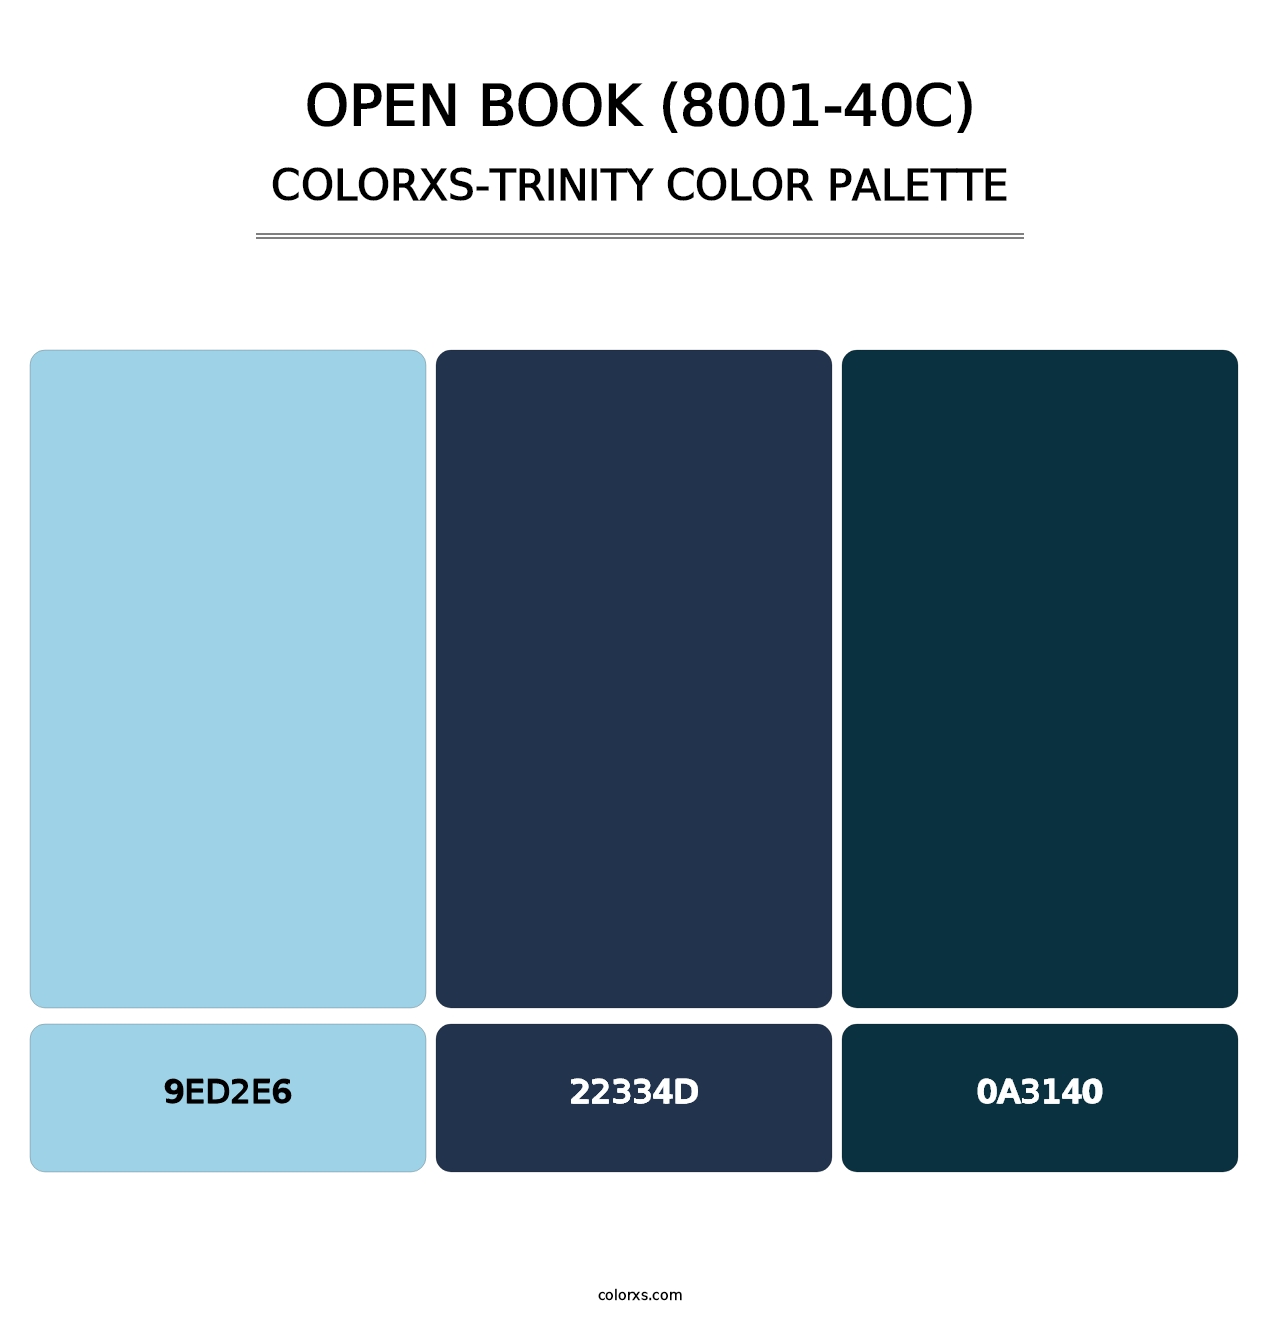 Open Book (8001-40C) - Colorxs Trinity Palette